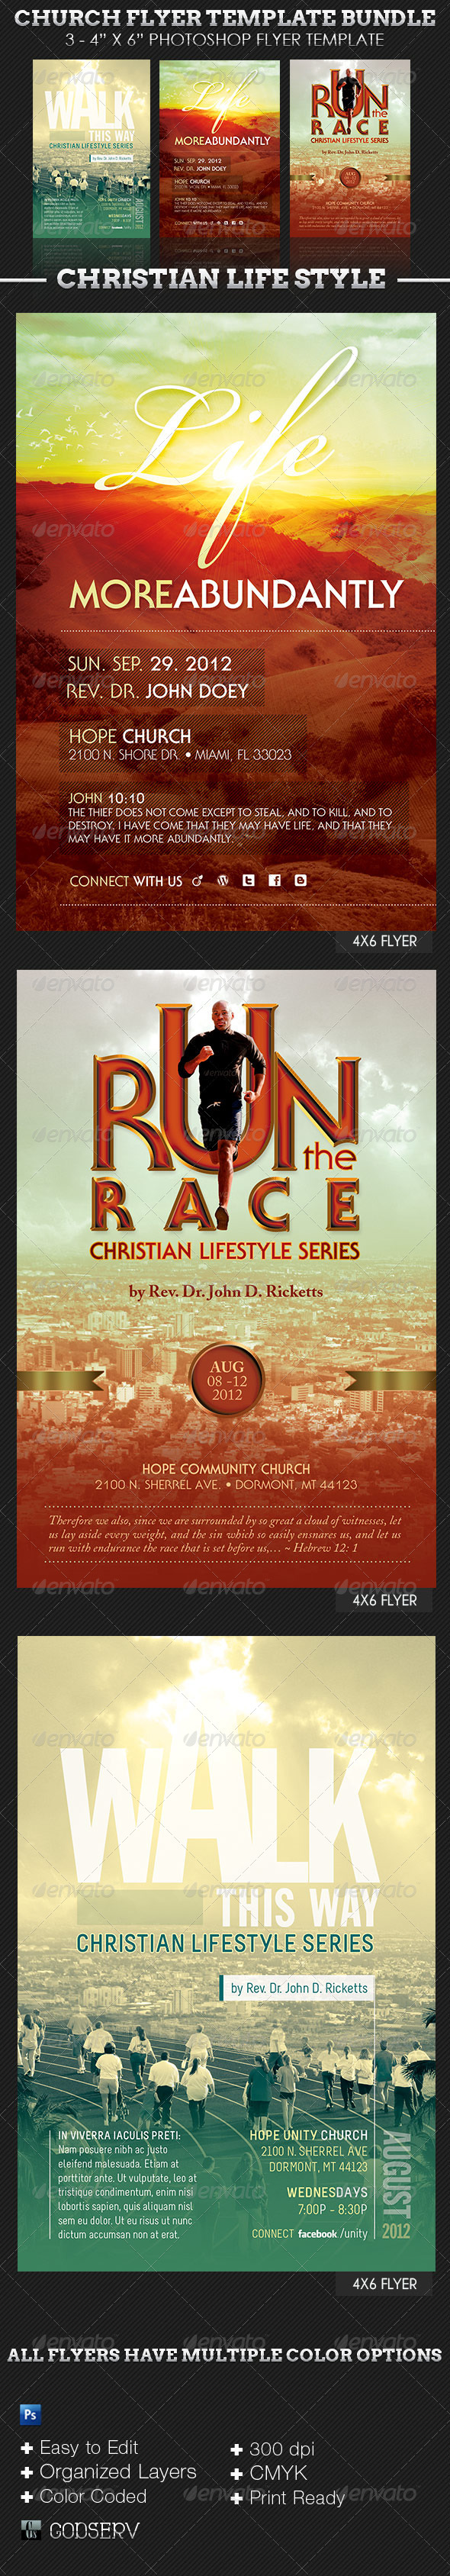 Church Flyer Template Bundle: Christian Lifestyle